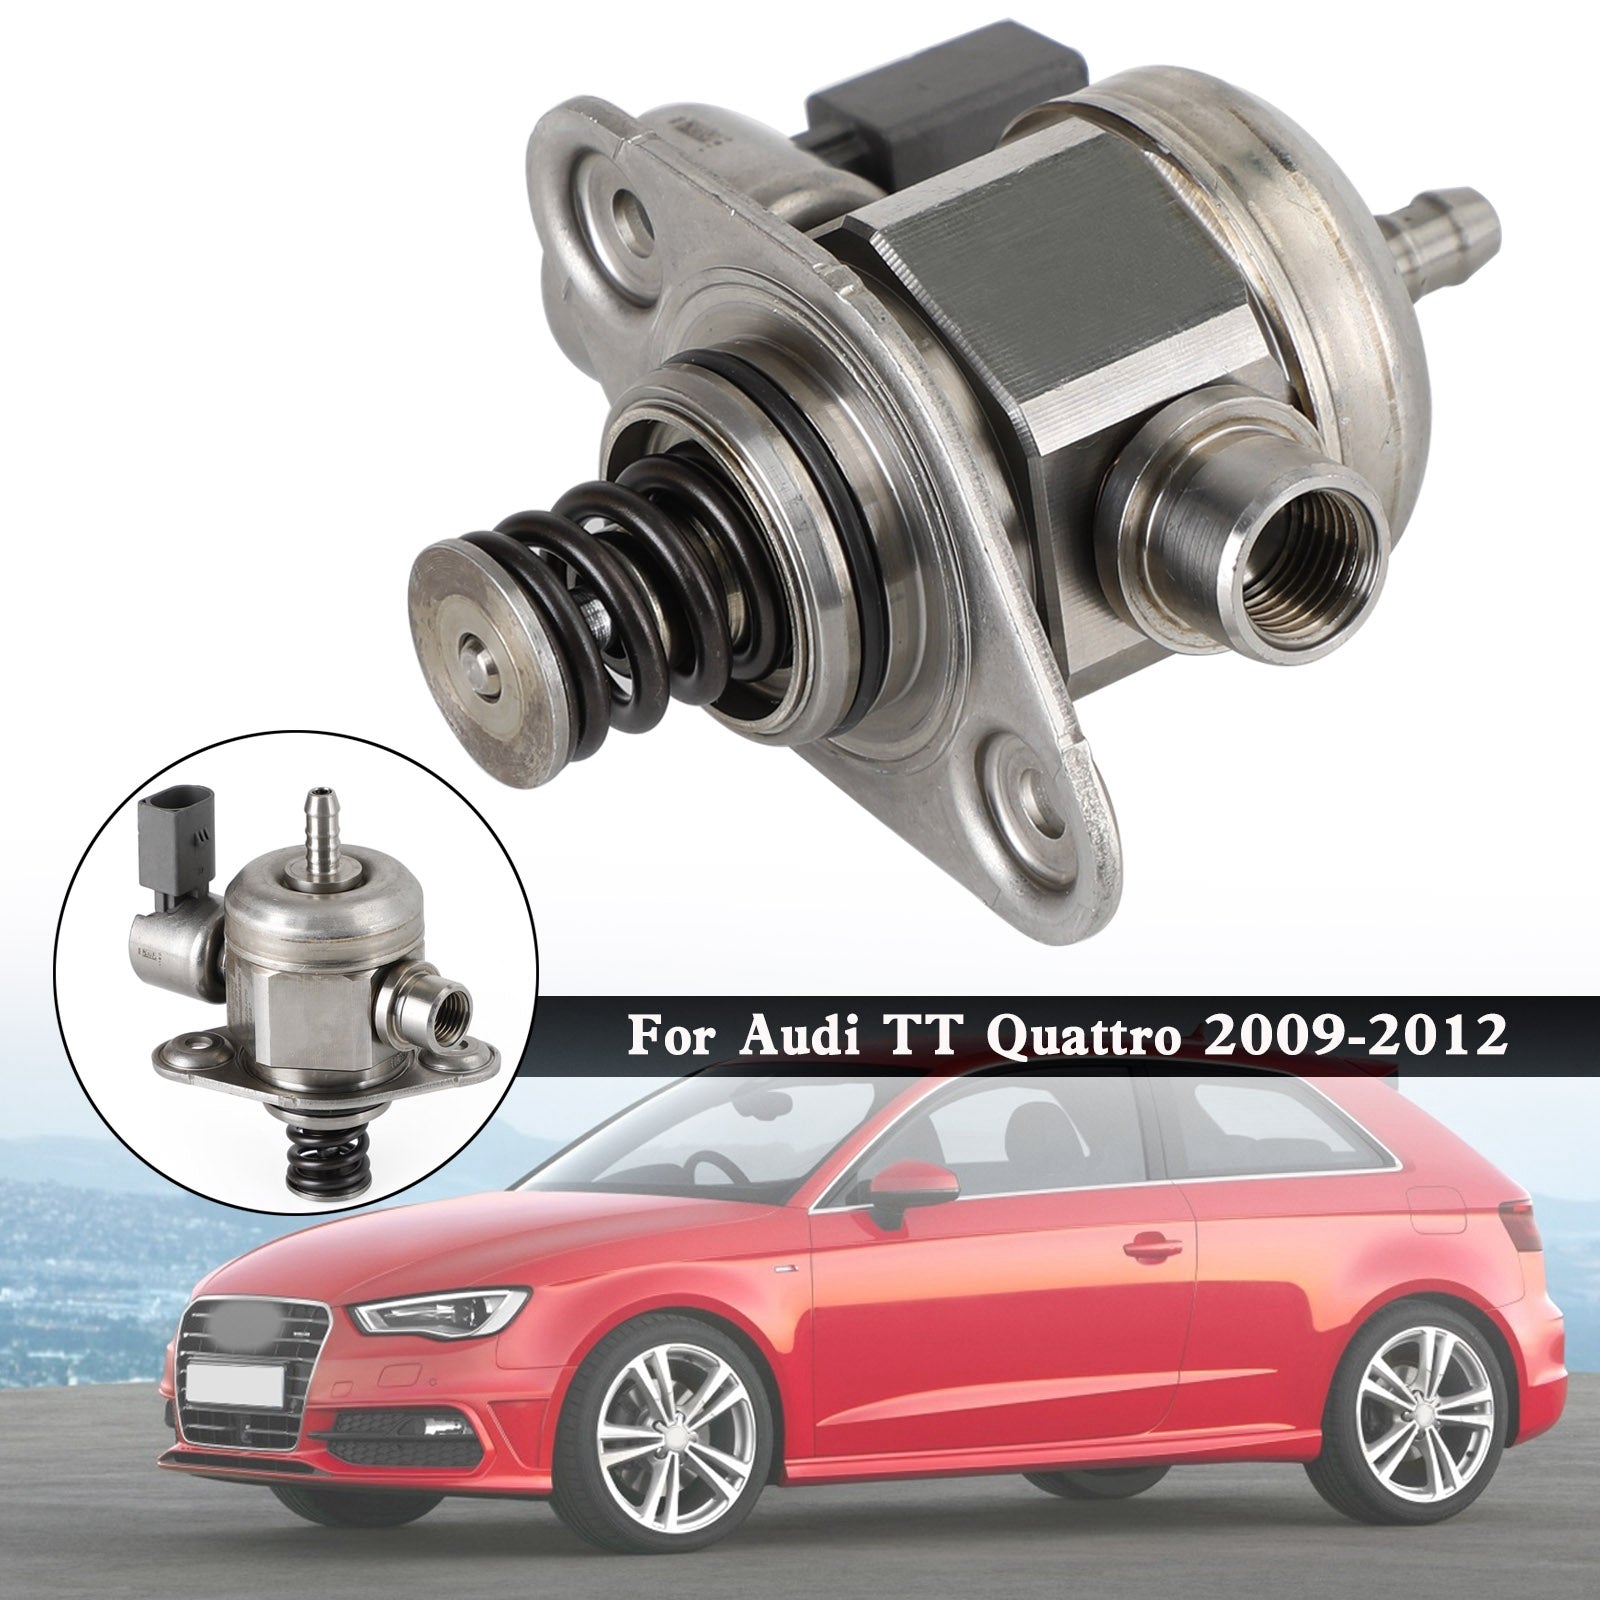 Pompa carburante ad alta pressione VW Beetle 2012-2013 / VW Eos 2009-2016 06H127025N